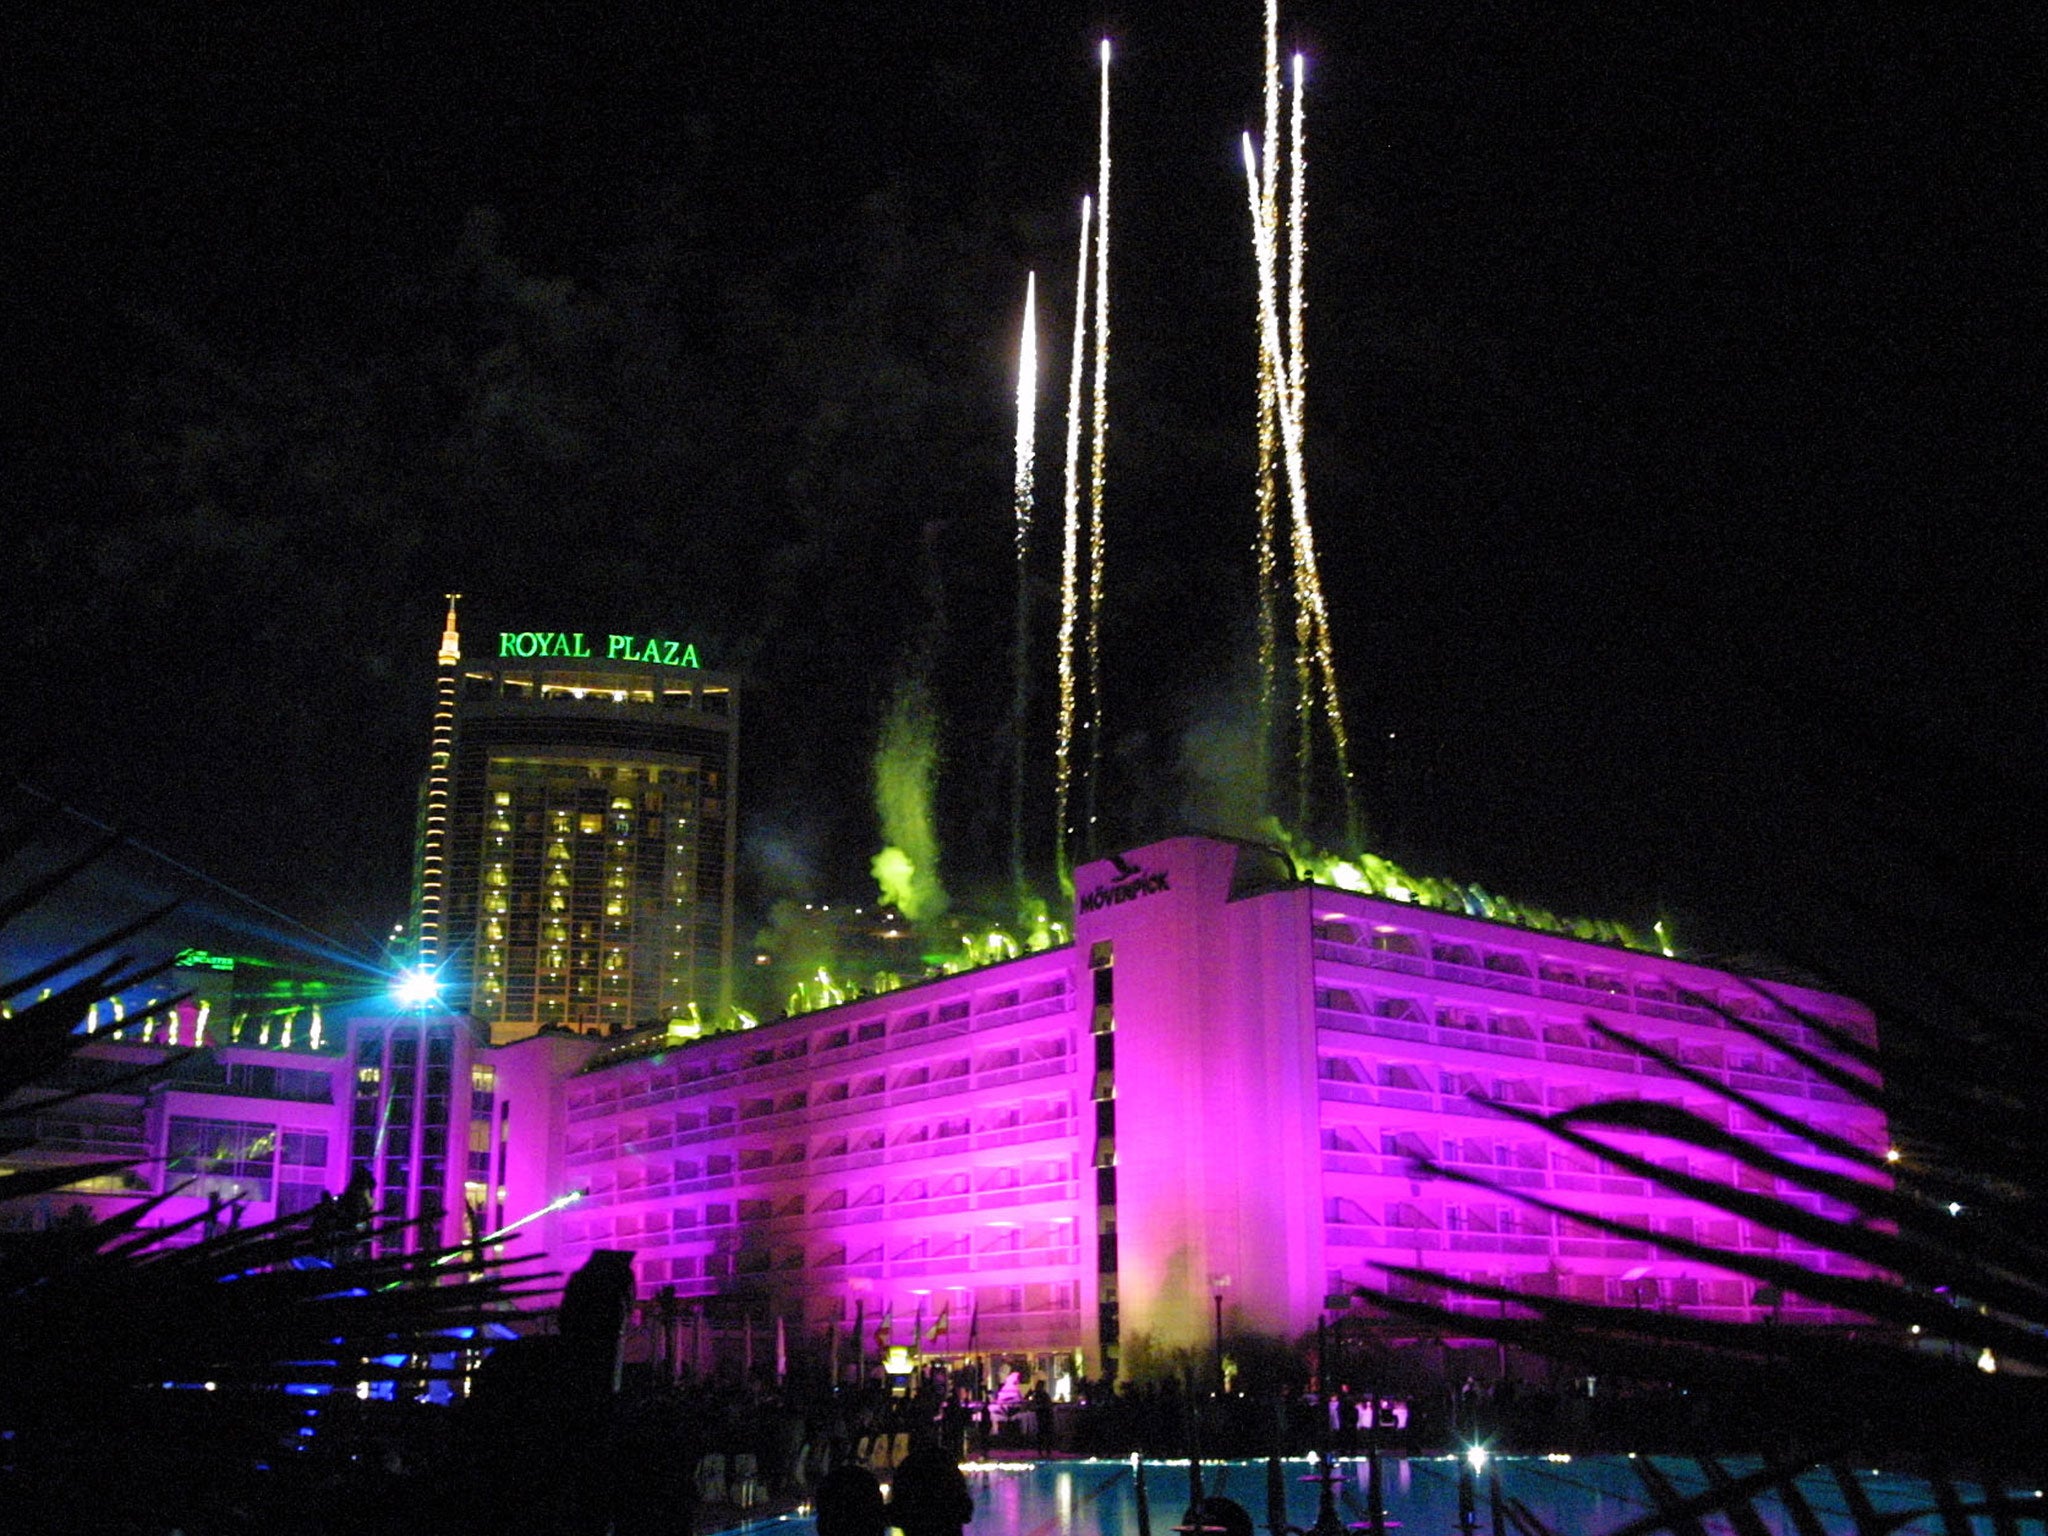 Movenpick Hotel, owned by Saudi billionaire Al-Walid bin Talal